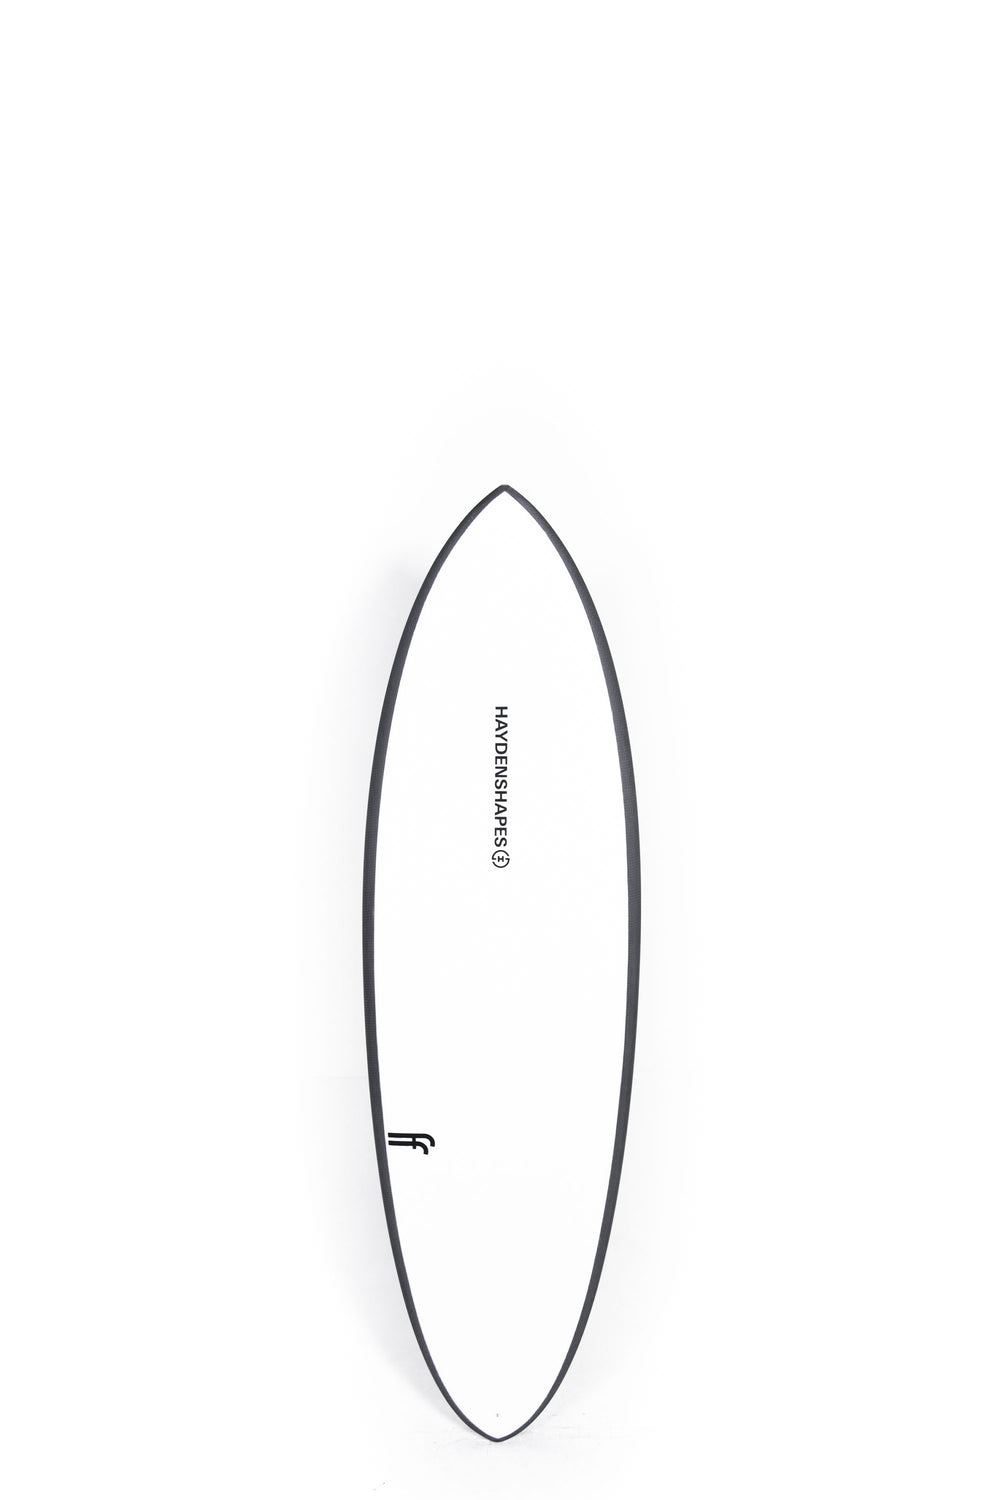 Pukas-Surf-Shop-HS-Surfboards-Hypto-Krypto-01-5_11_-Clear